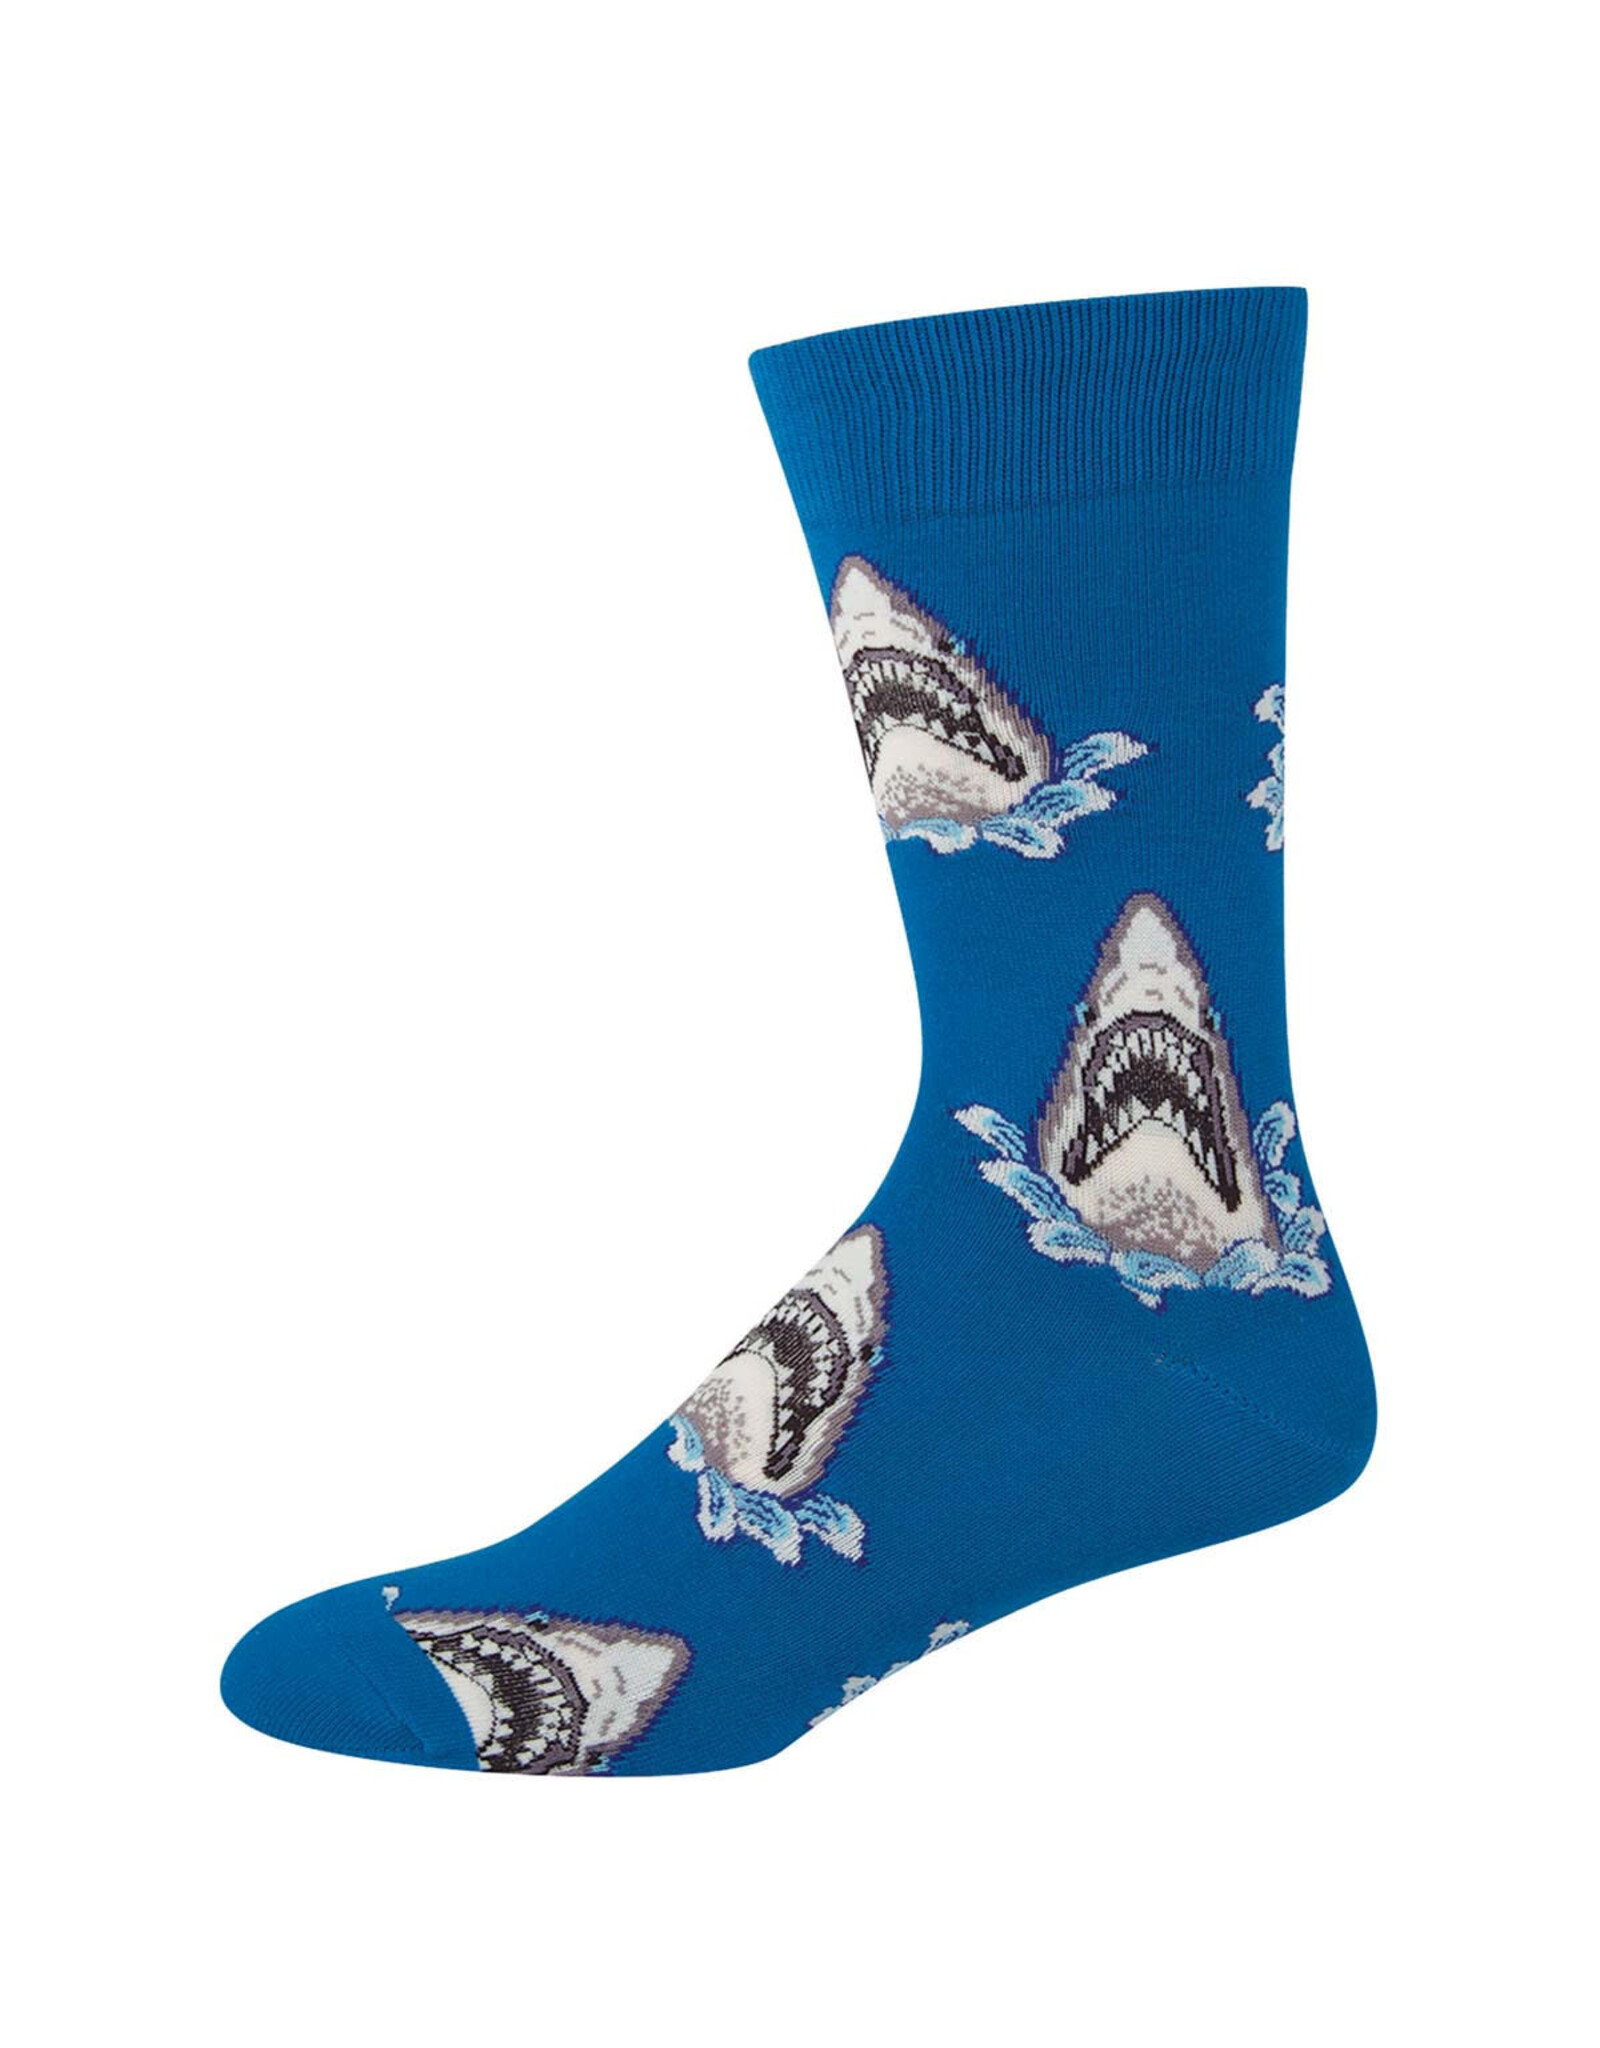 Socksmith Design Shark Attack Blue 10-13 Men's Crew Socks